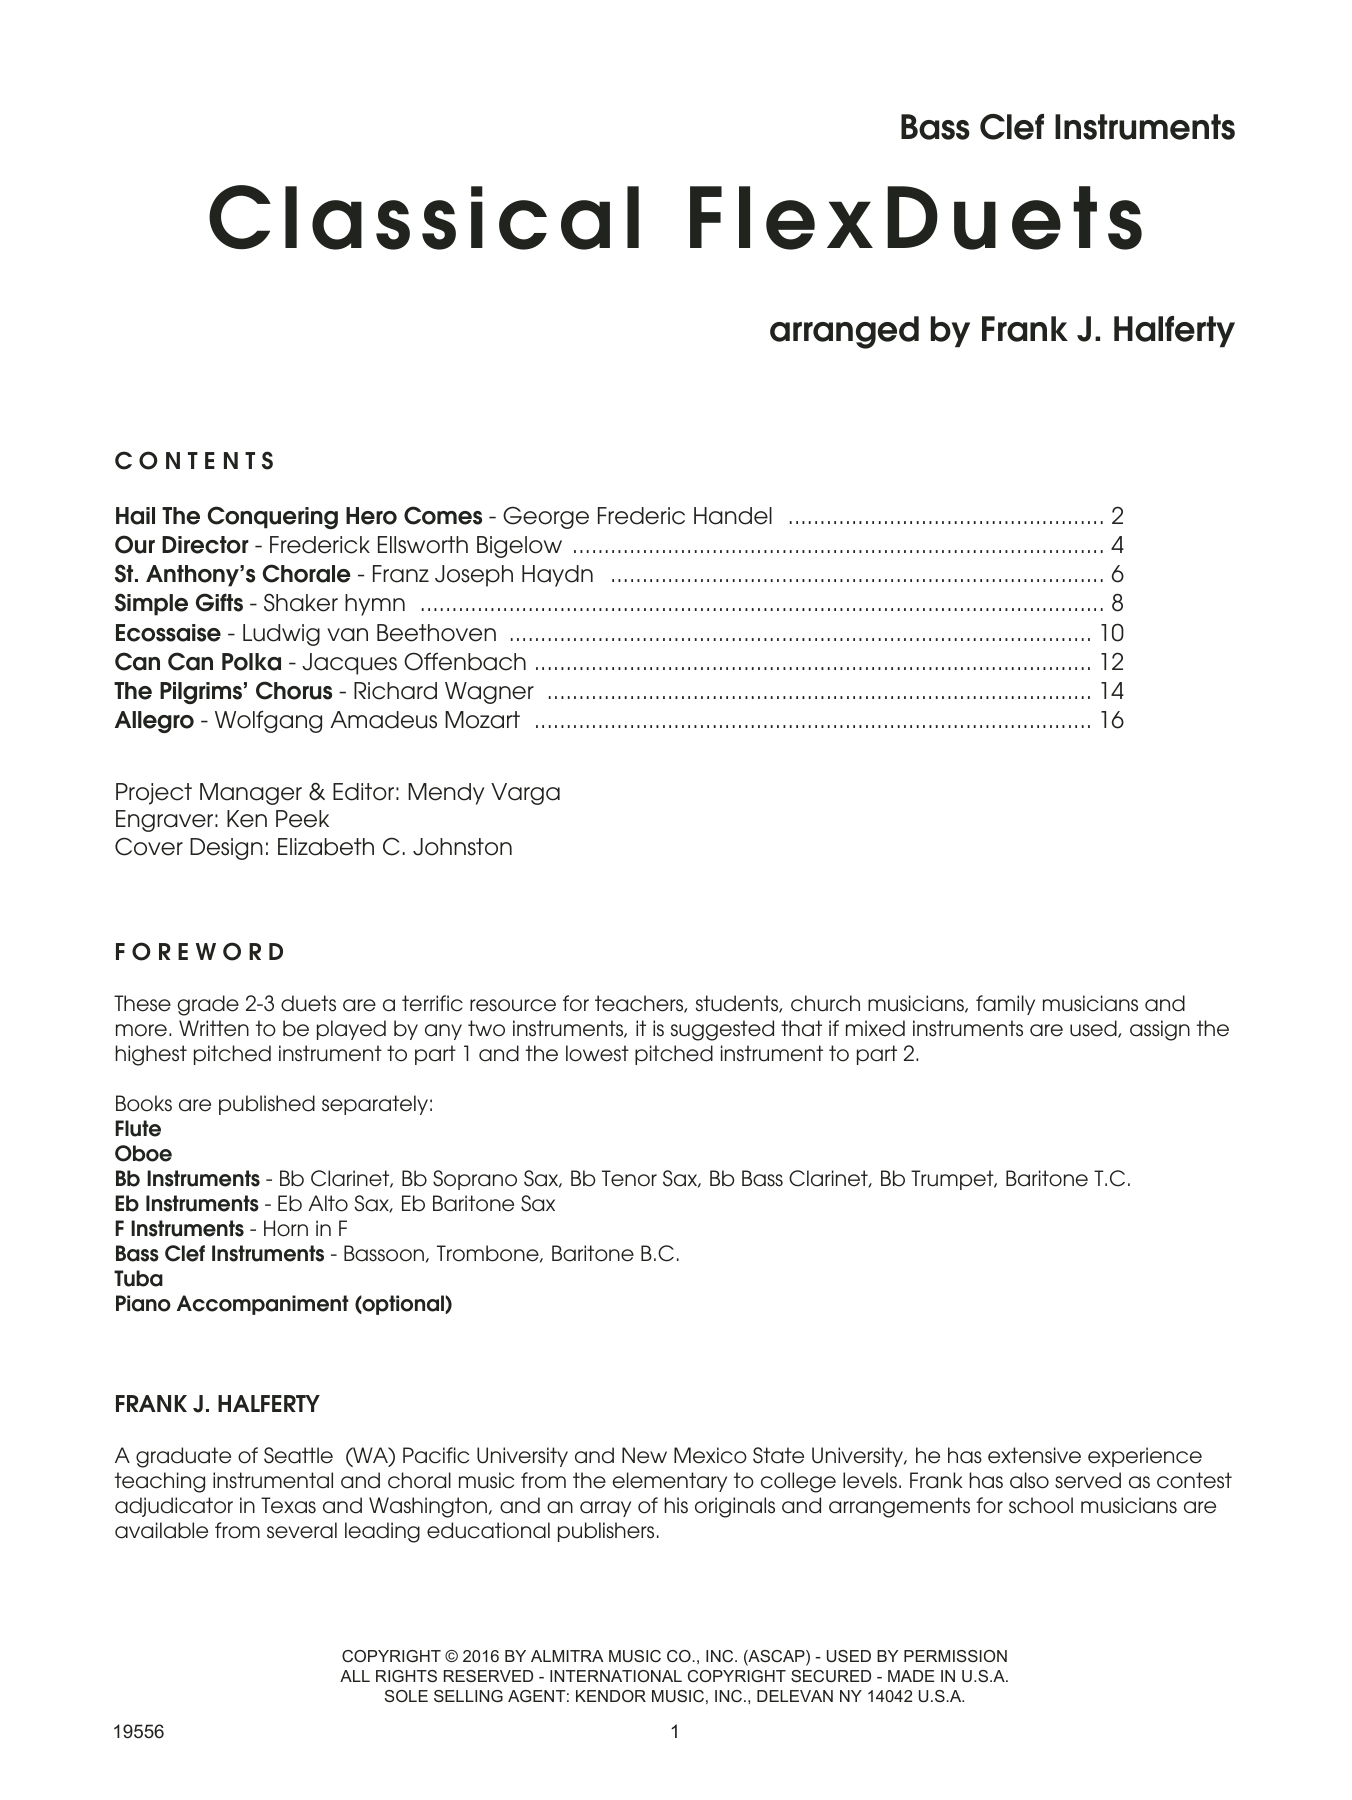 Download Frank J. Halferty Classical FlexDuets - Bass Clef Instrum Sheet Music